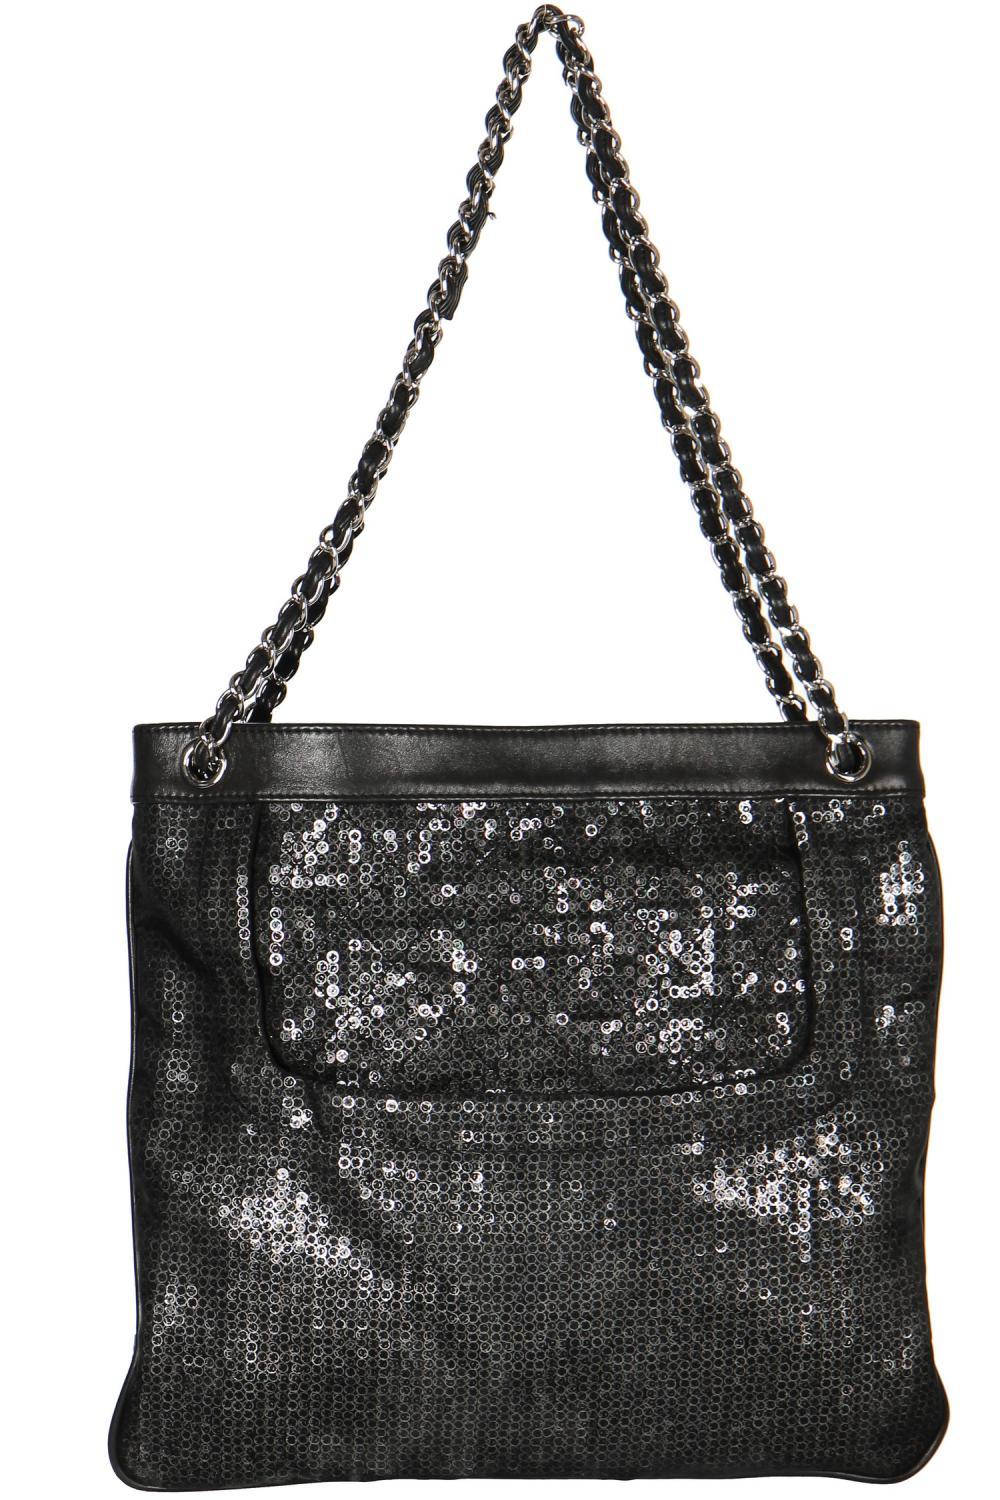 Chanel Calfskin Mesh Hidden Sequin CC Black Tote Bag For Sale at ...